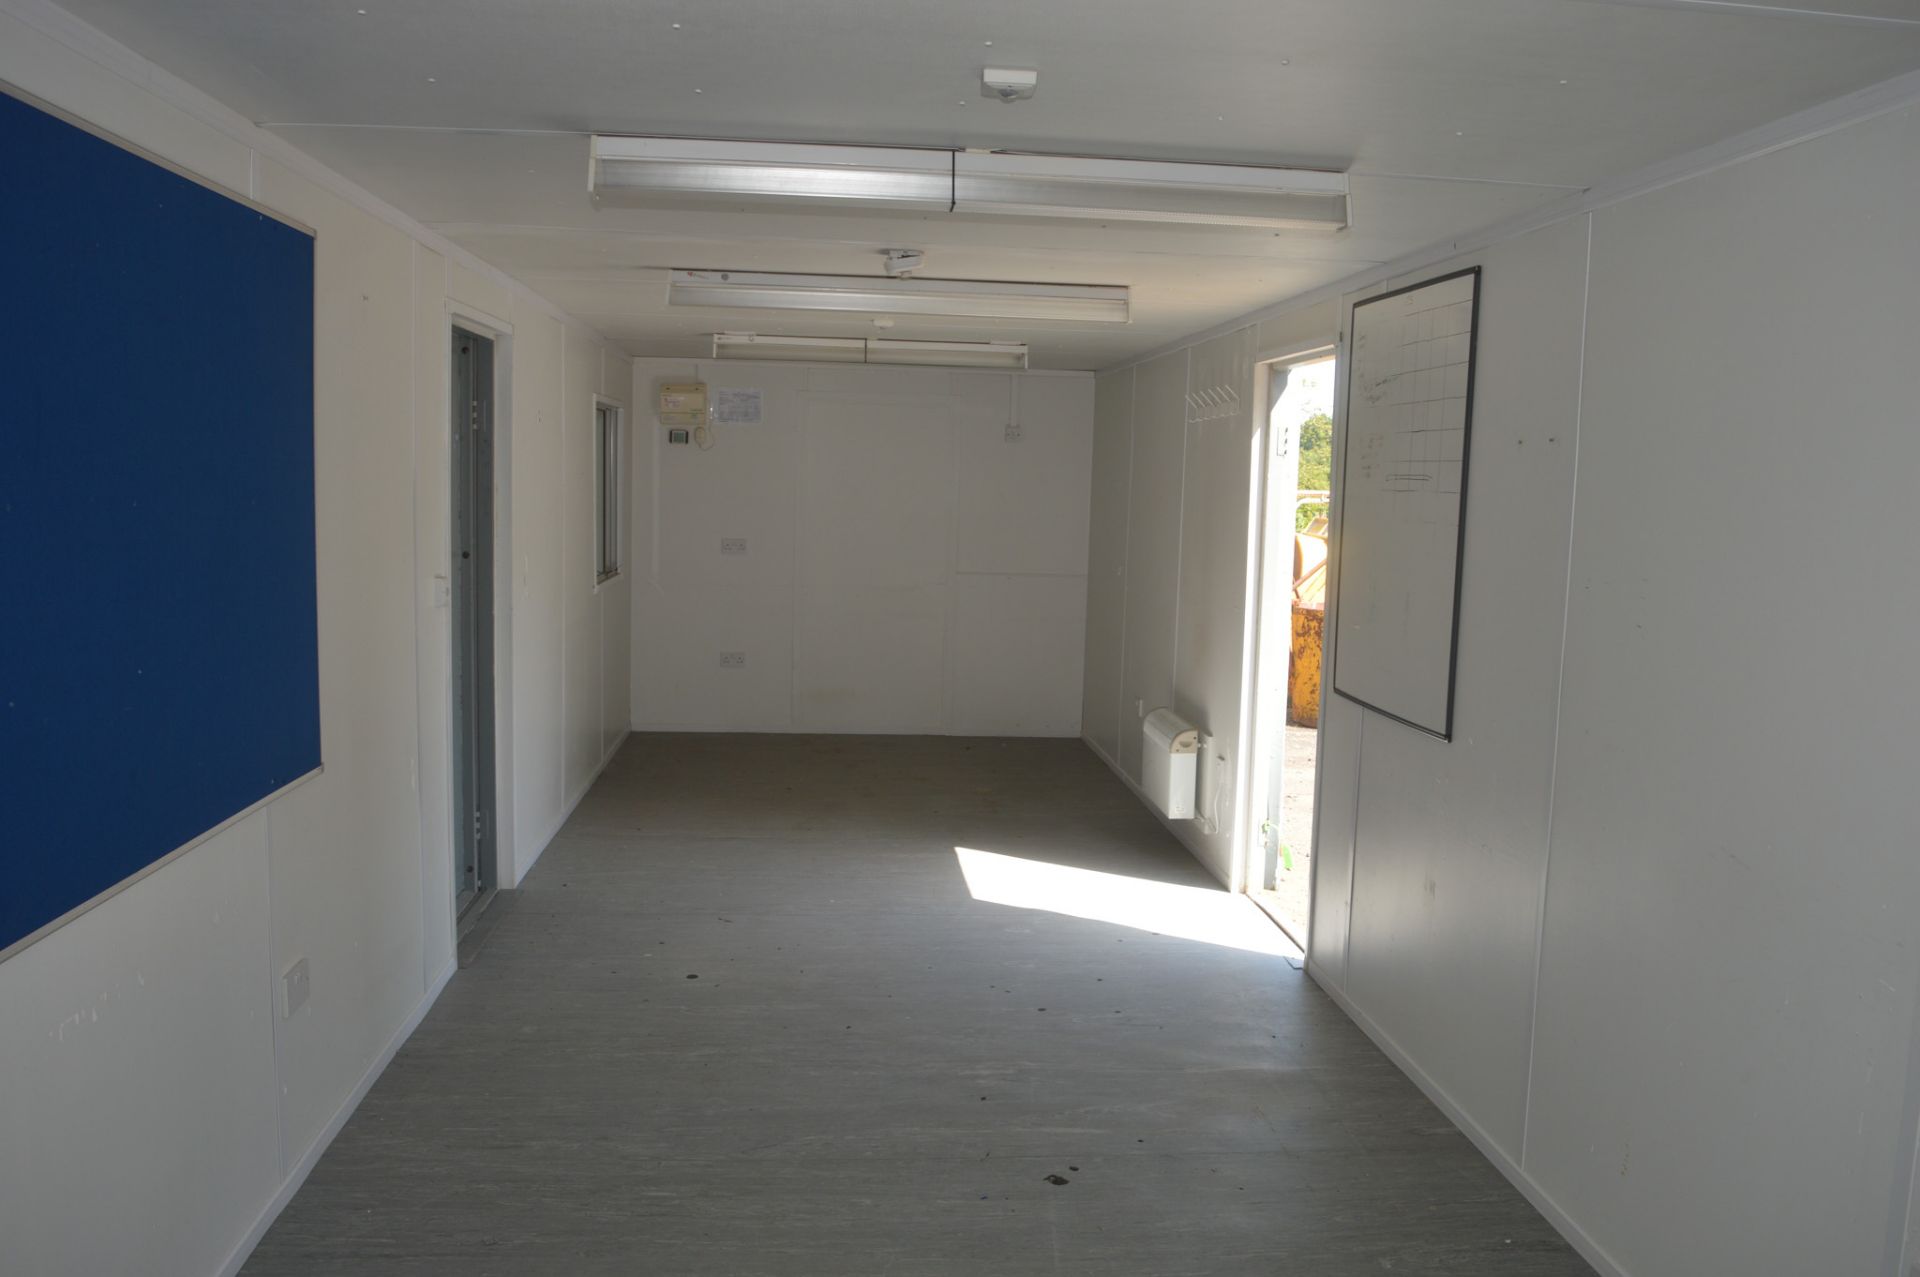 32 ft x 10 ft jack leg steel anti vandal site unit office *Door missing* c/w keys in office - Image 6 of 6